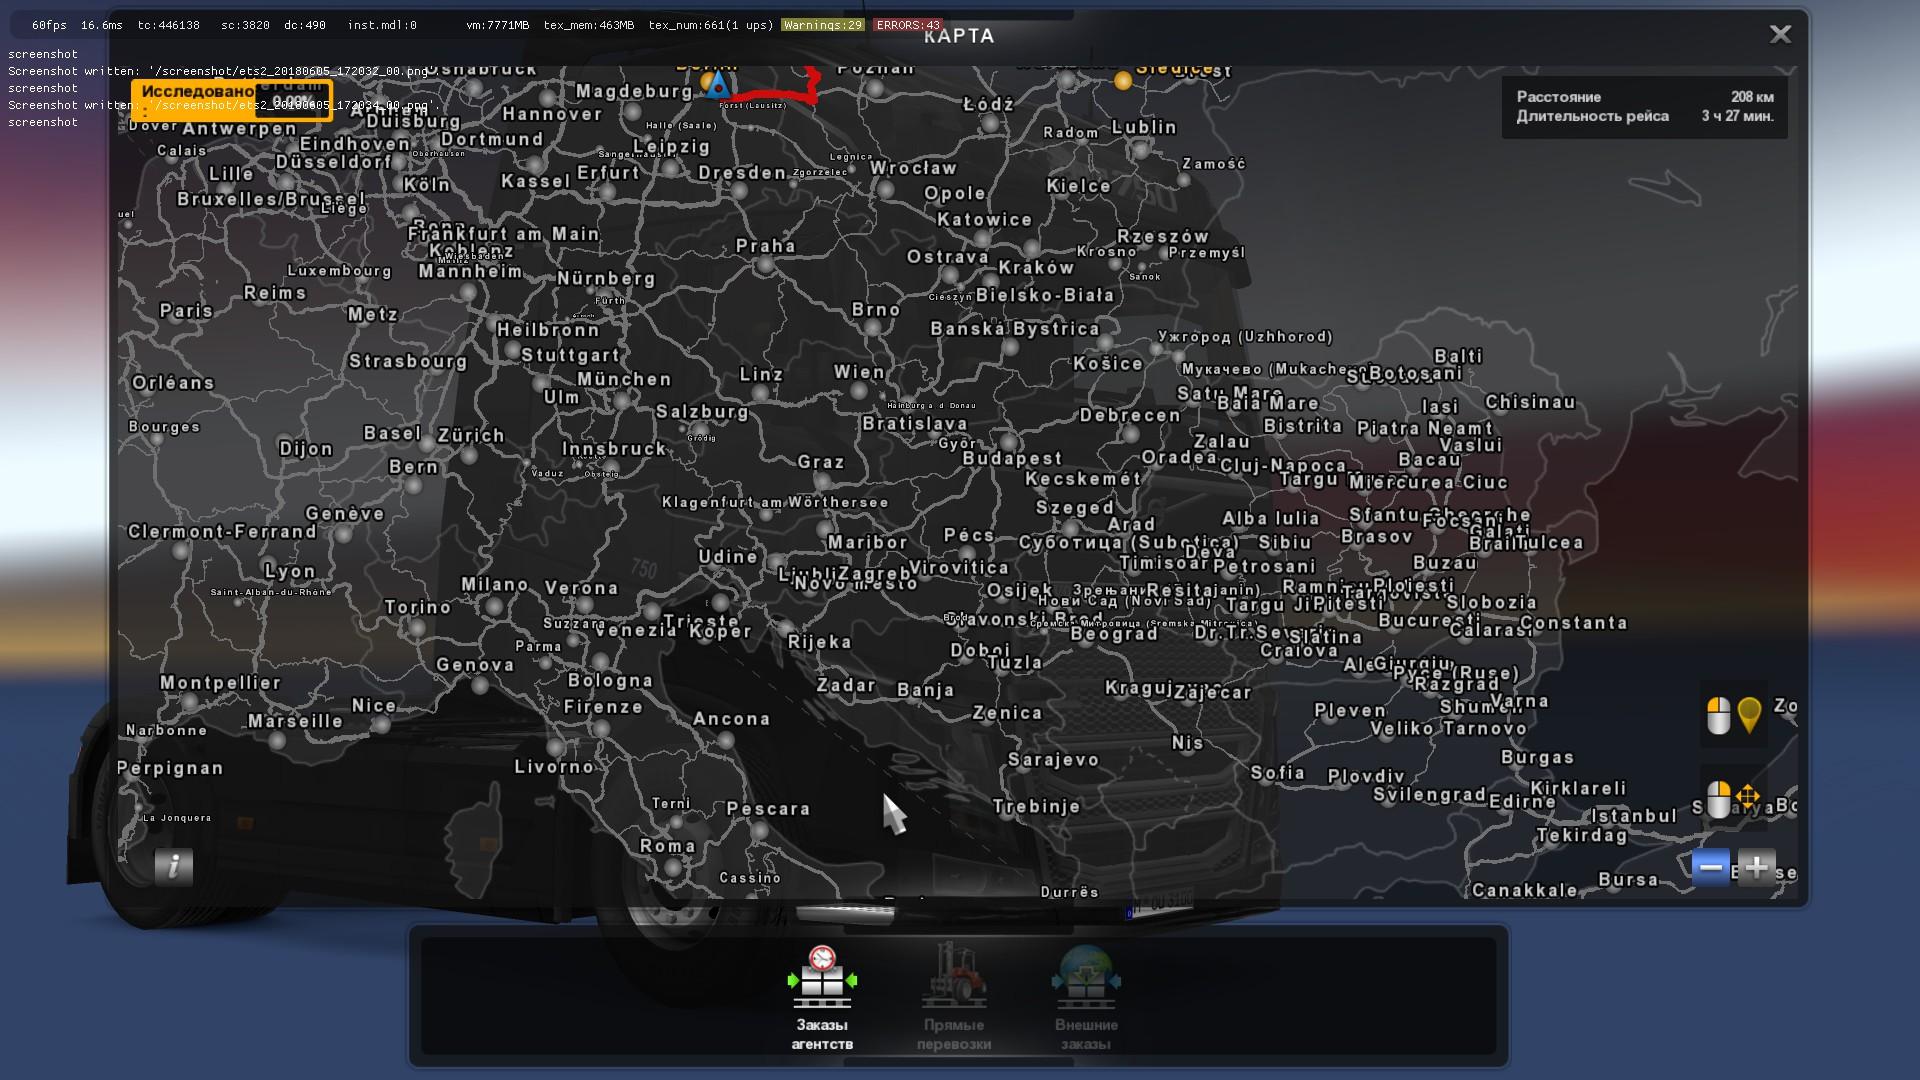 Euro truck simulator 2 romania map download torrent tpb bleach ep 201 legendado torrent